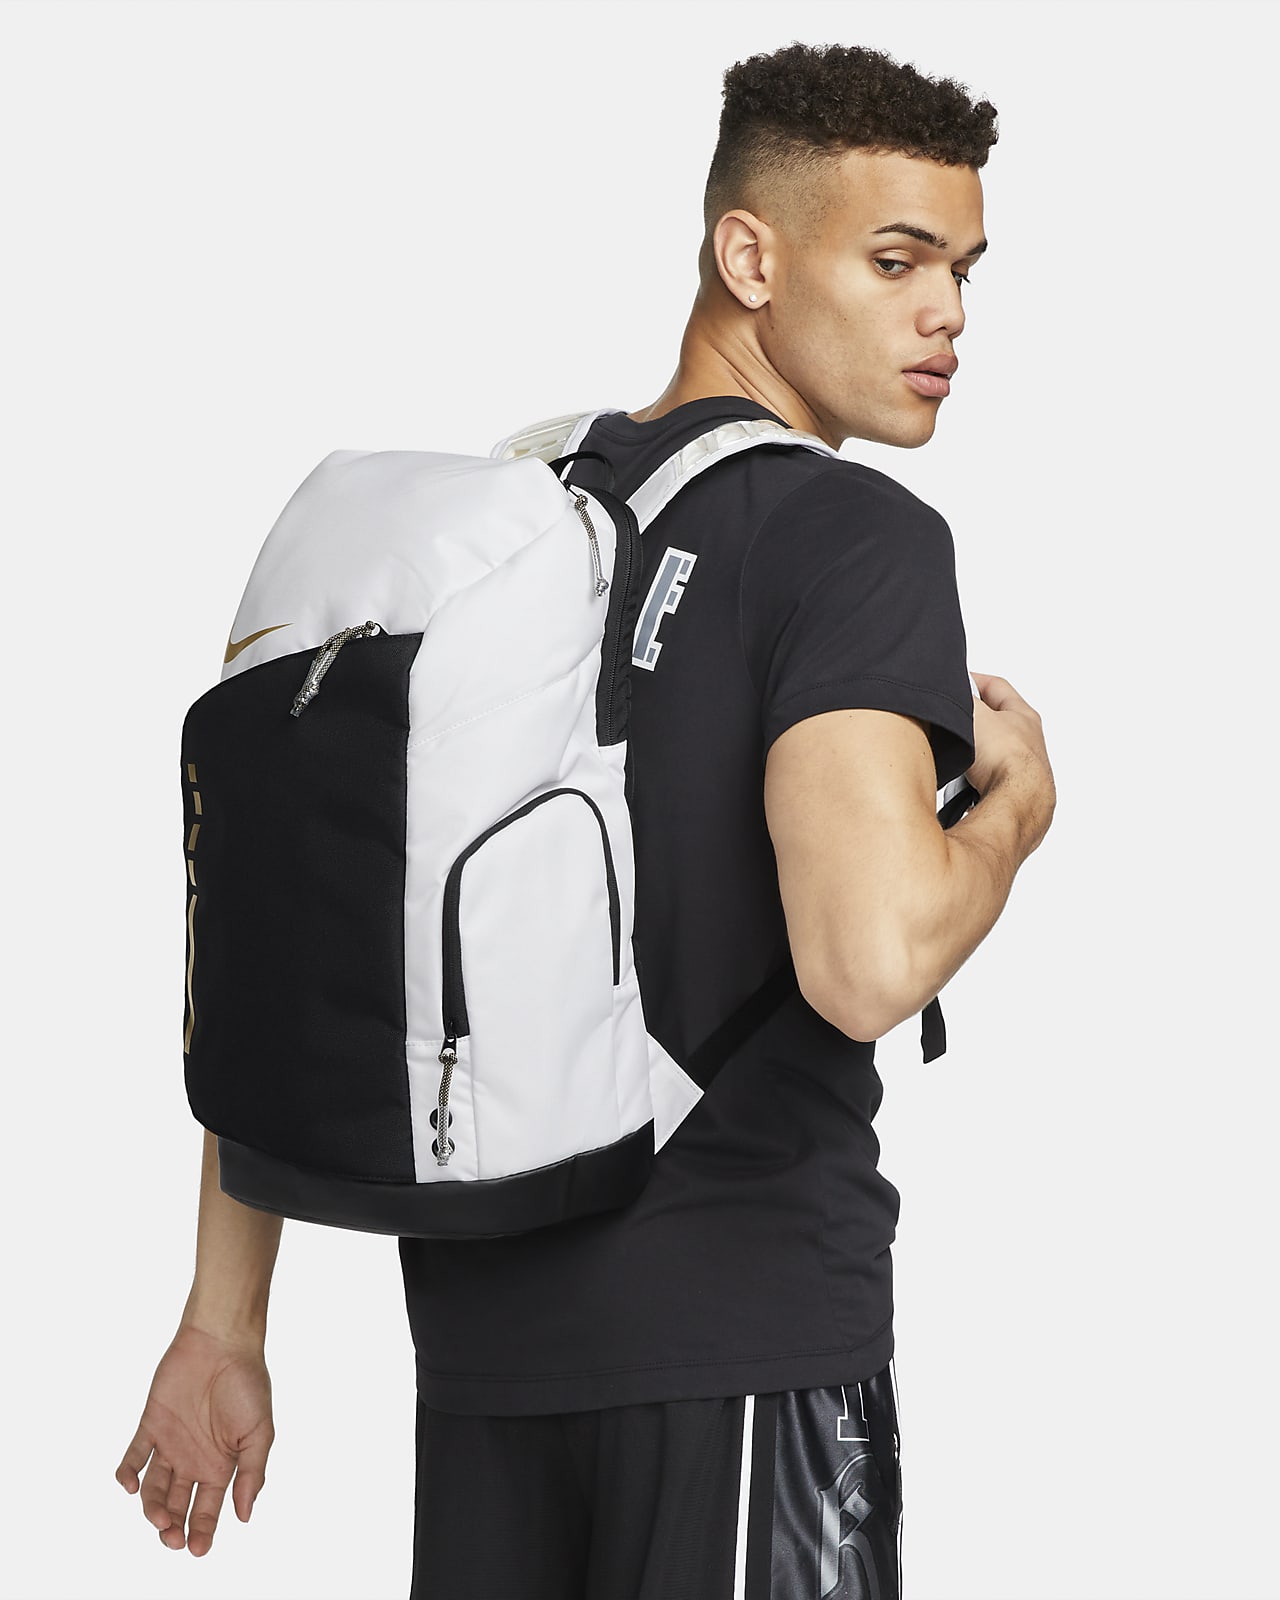 Buy Nike Hoops Elite Backpack, Black, One Size at Amazon.in